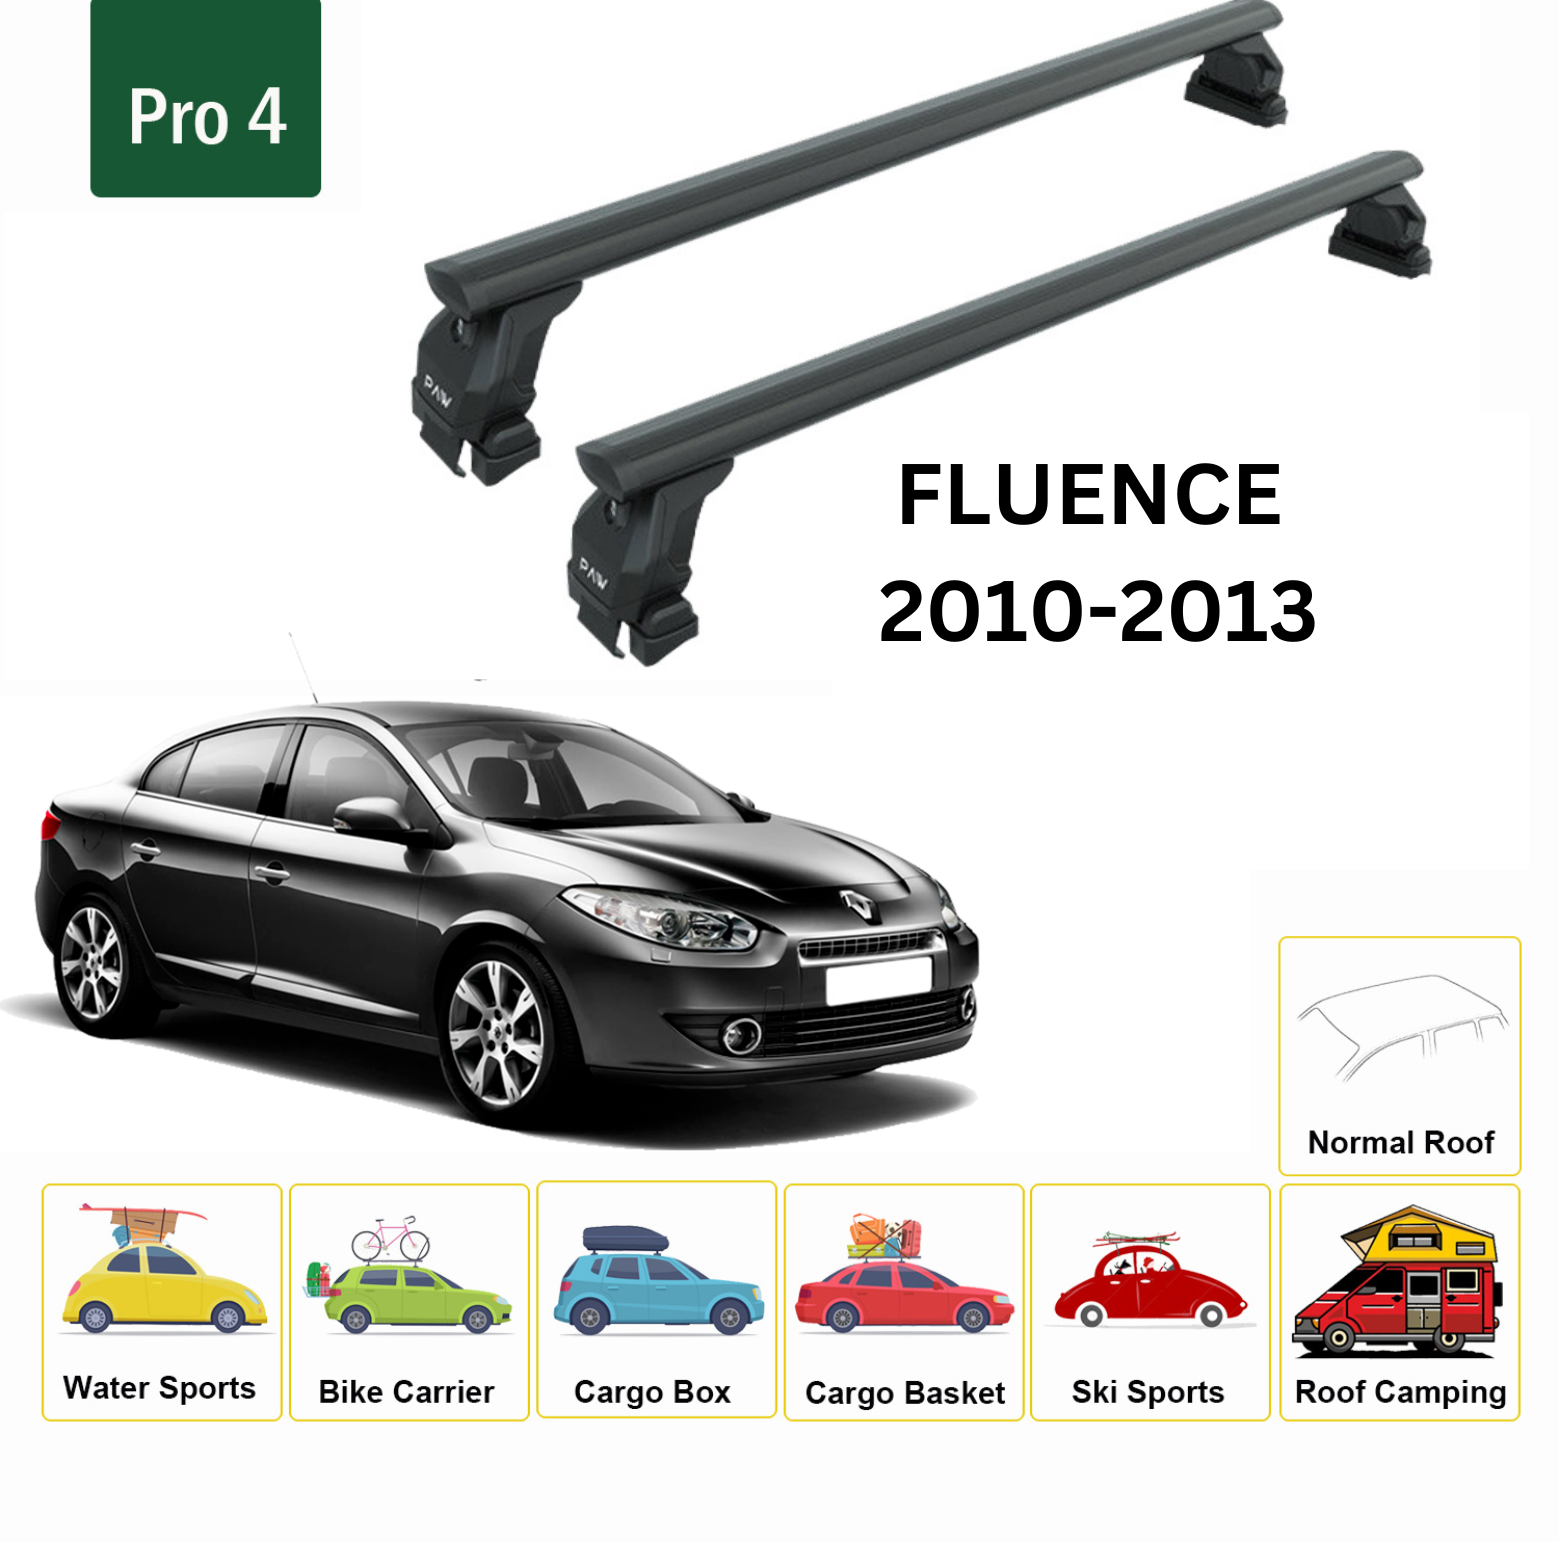 For Renault Fluence 2010-2013 Roof Rack System, Aluminium Cross Bar, Metal Bracket, Normal Roof, Black - 0